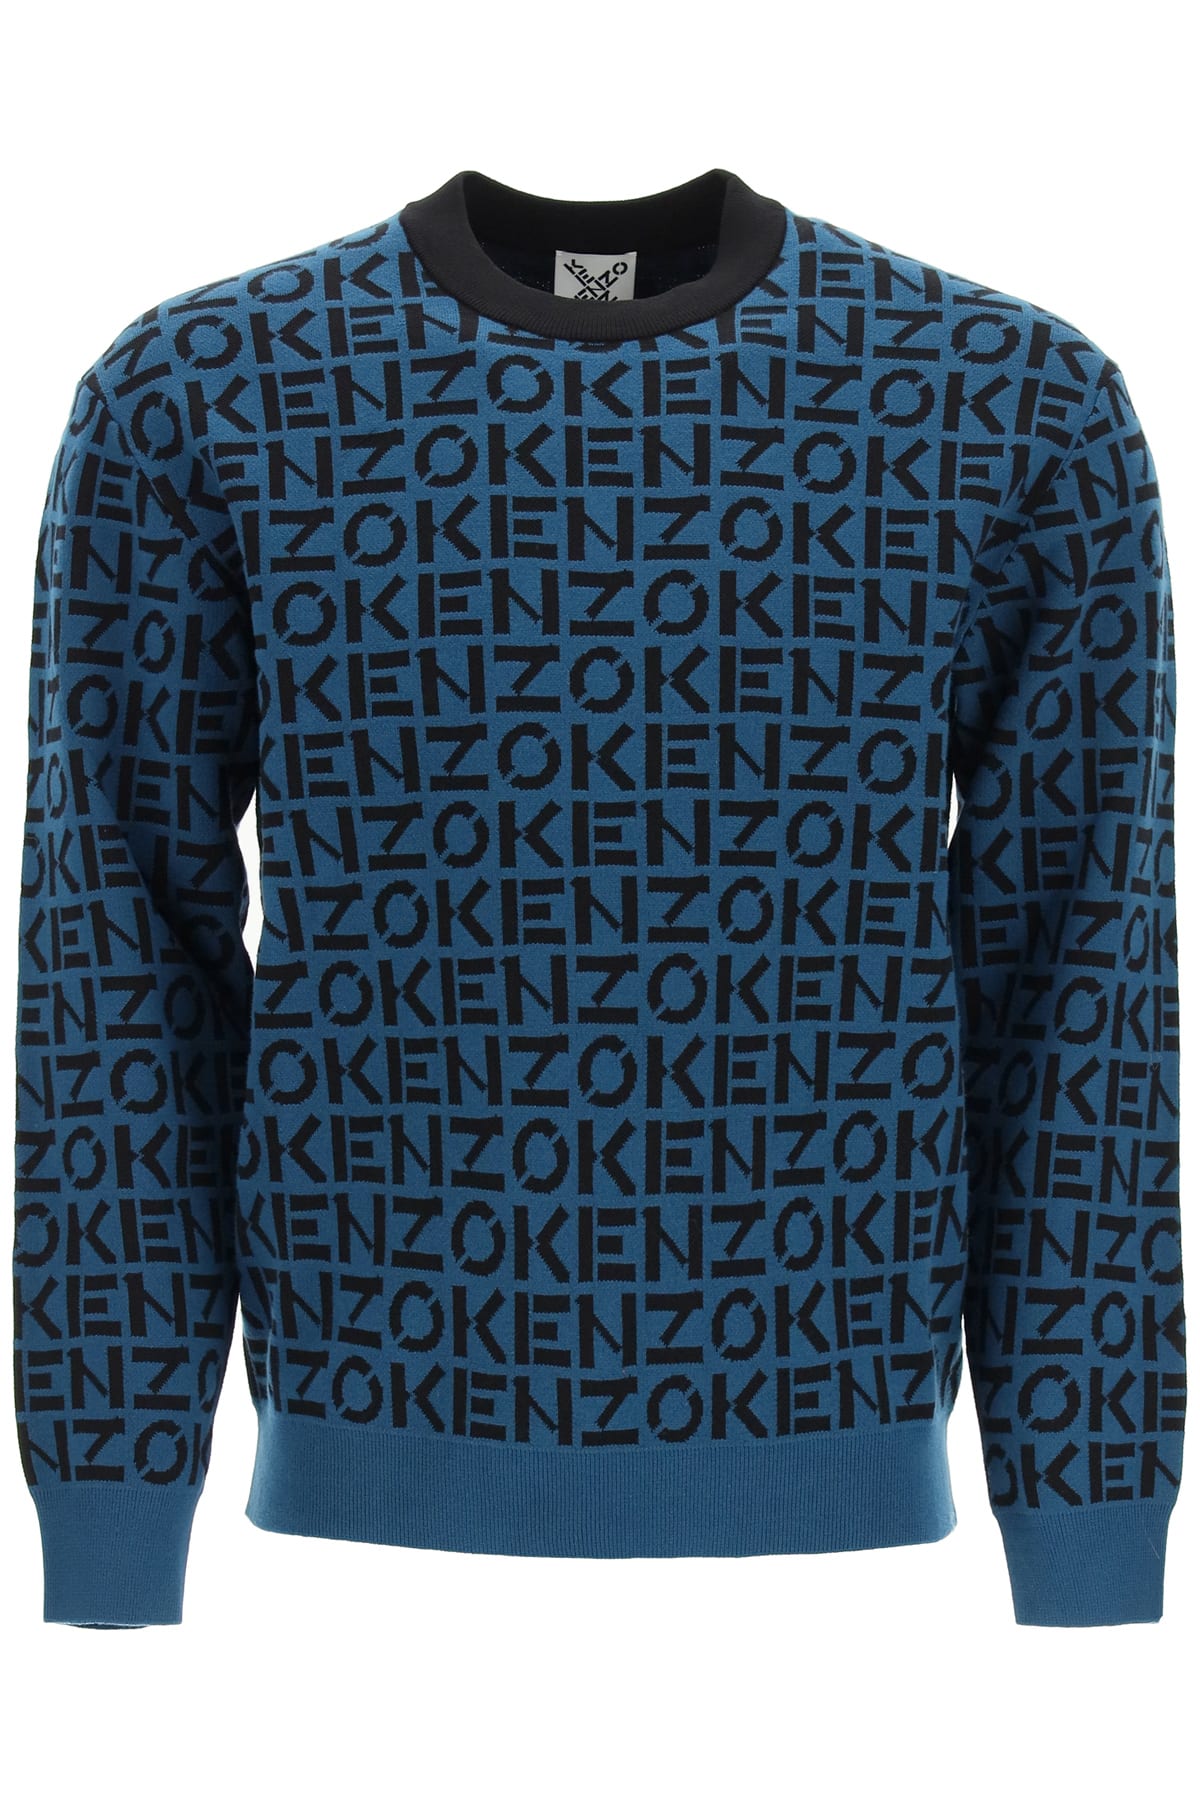 Kenzo Jaquard Monogram Pullover